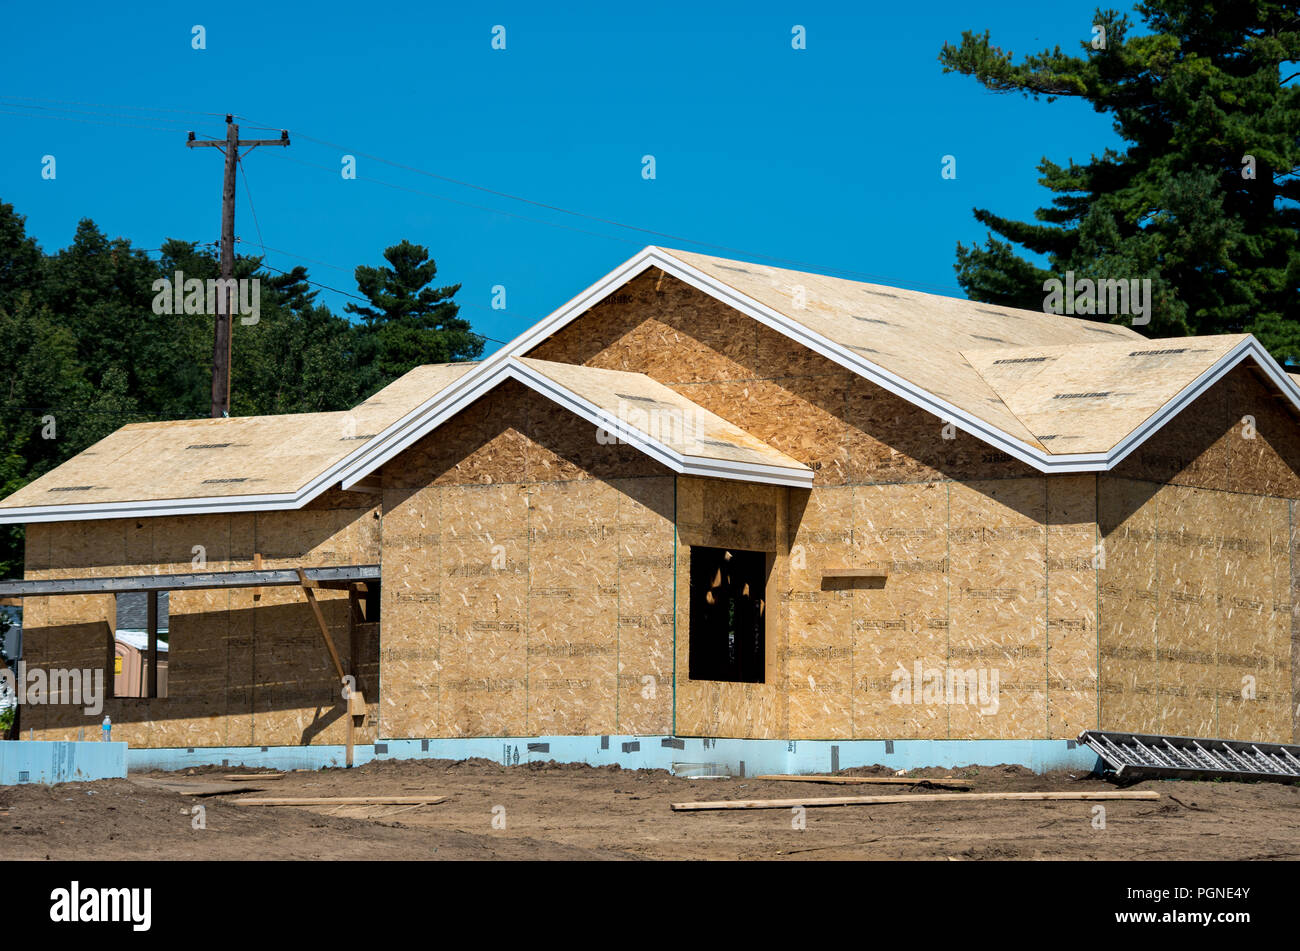 House under construction Stock Photo